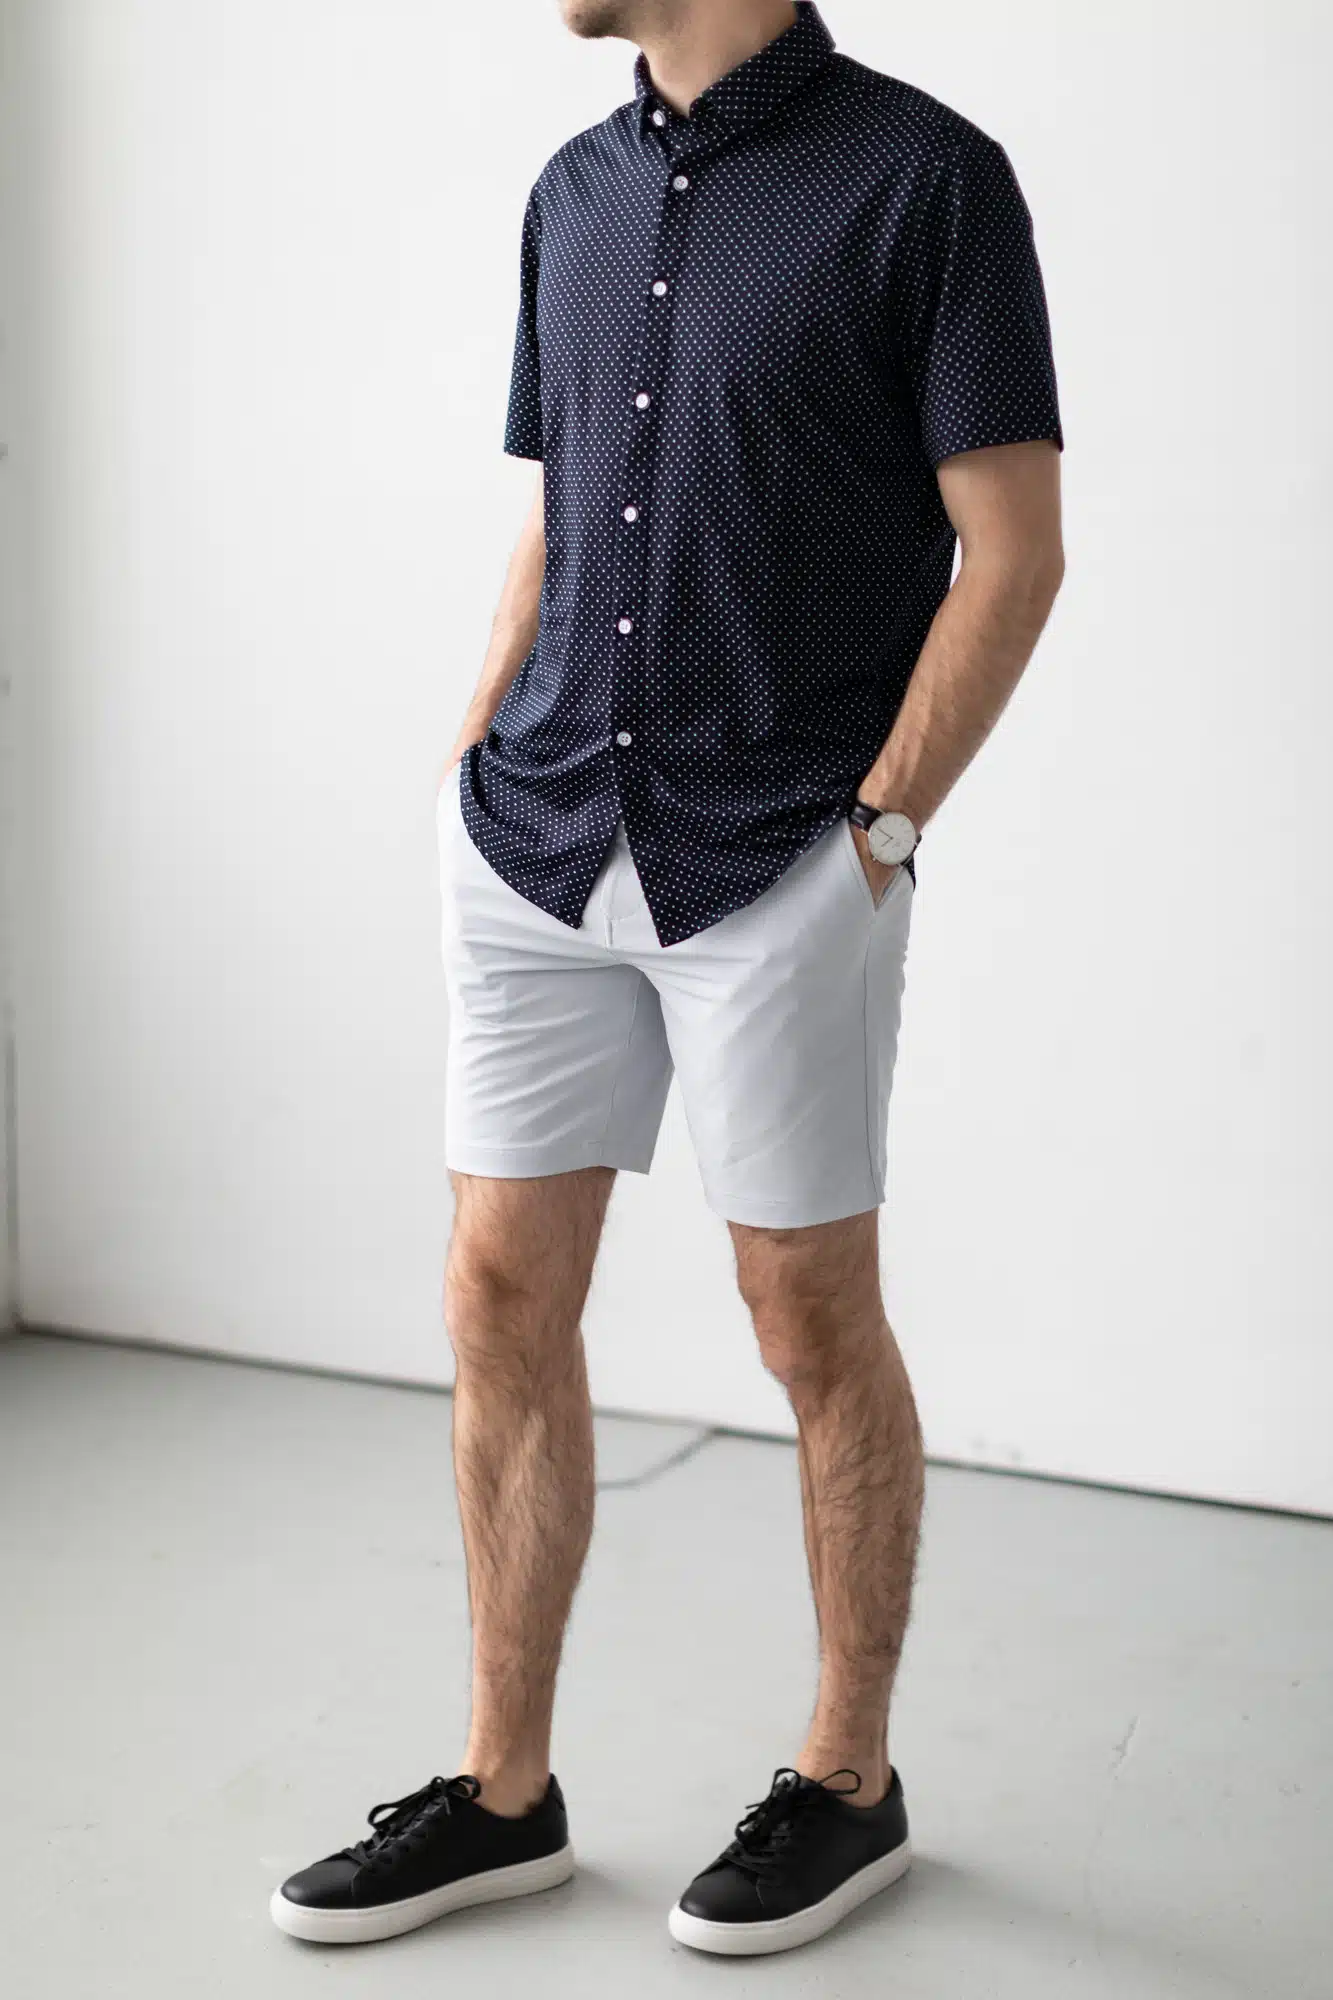 David in Mizzen+Main Halyard short sleeve shirt and Helmsman shorts